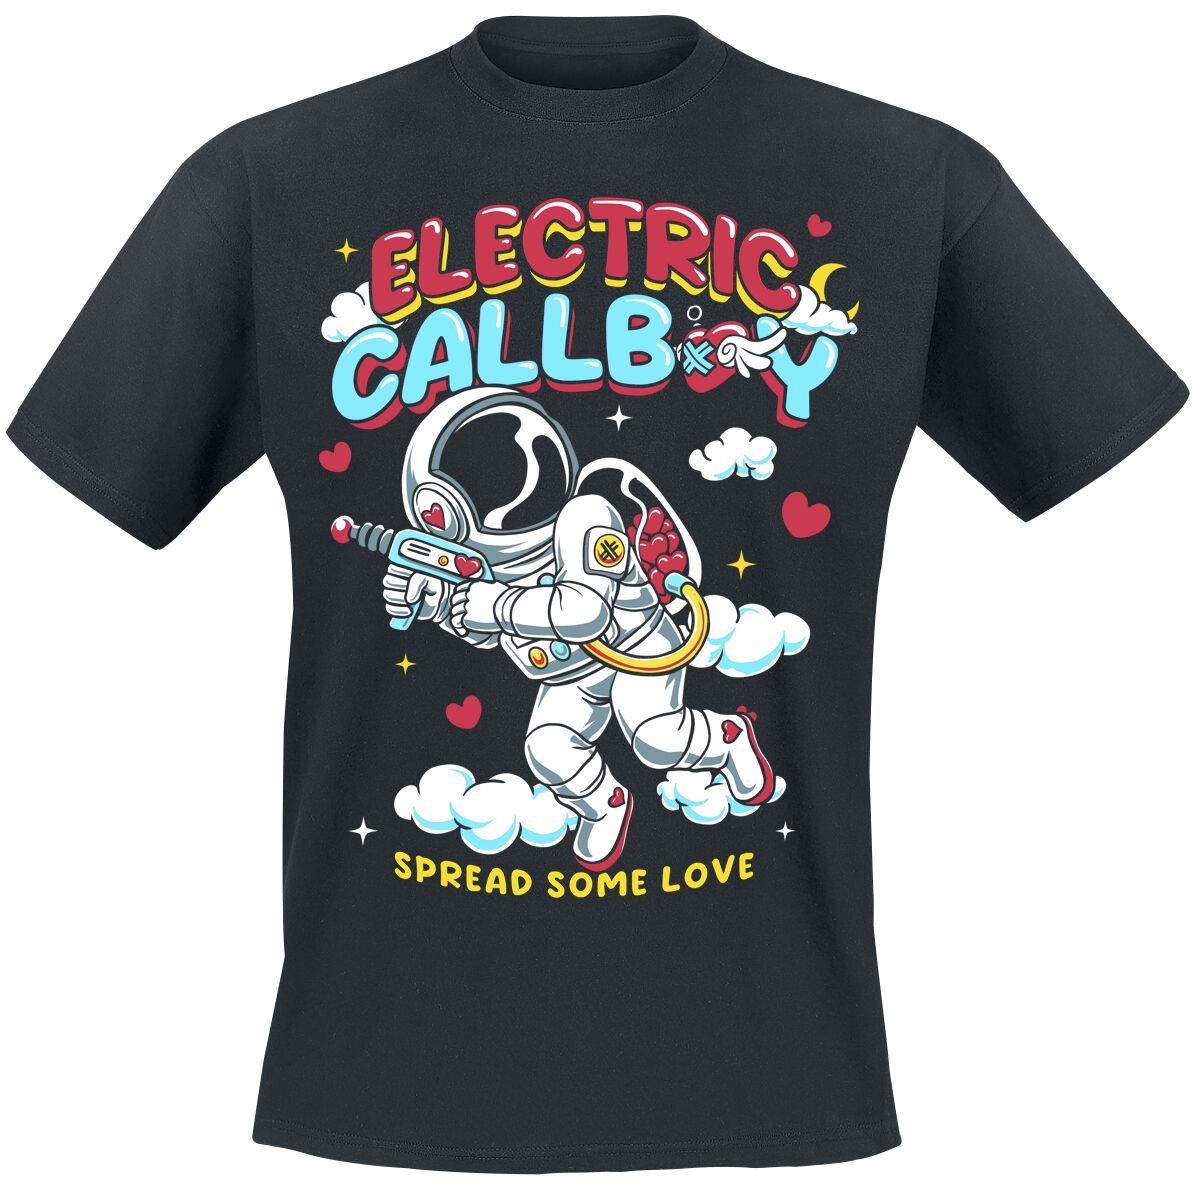 Electric Callboy Spread Some Love T-Shirt schwarz in S